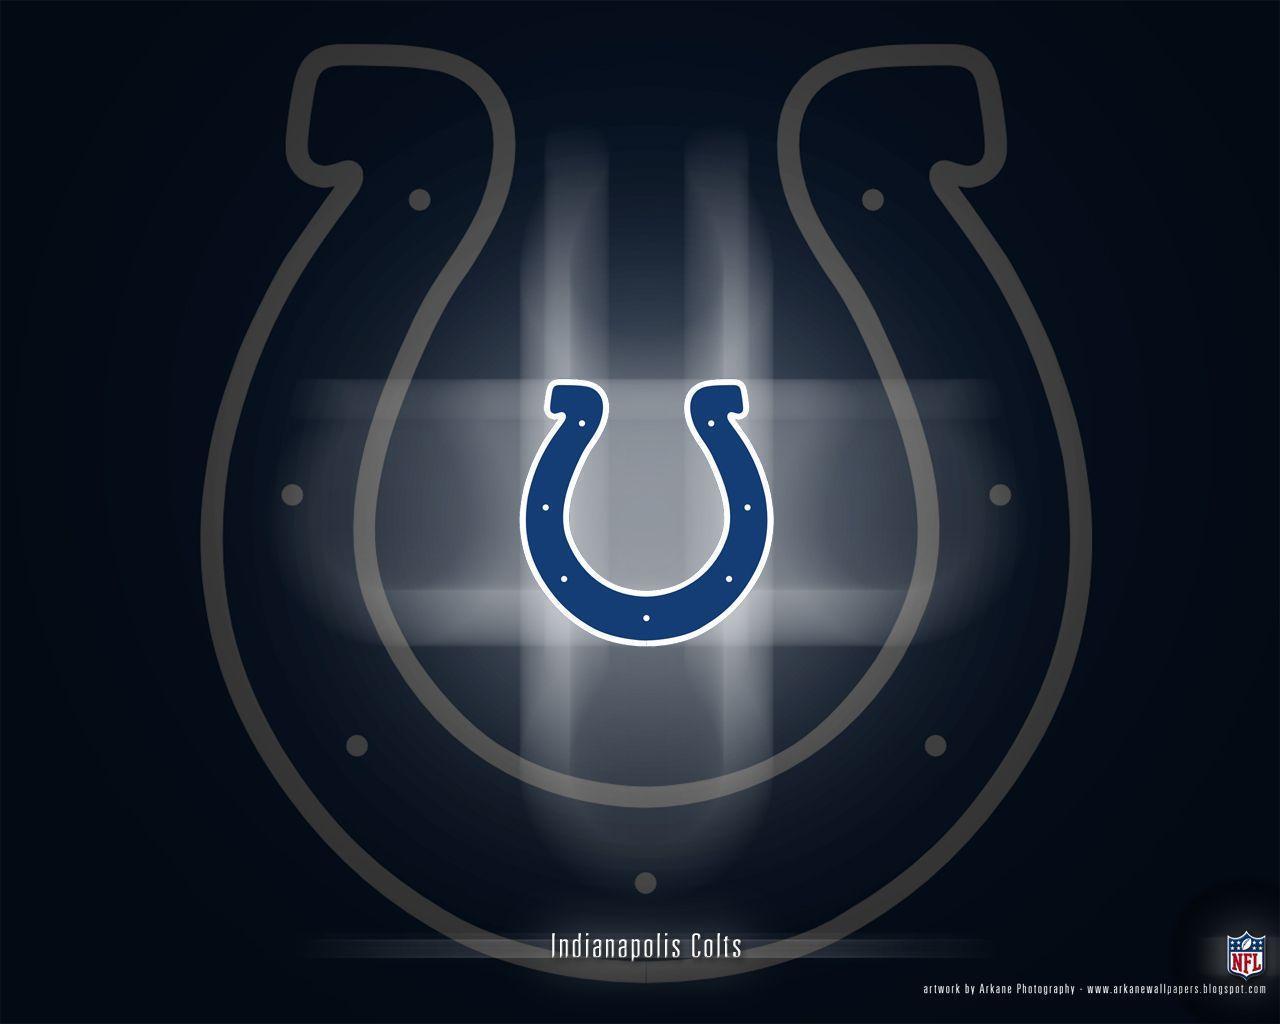 Indianapolis Colts 2013 Football Season. Indy Homes Real Estate